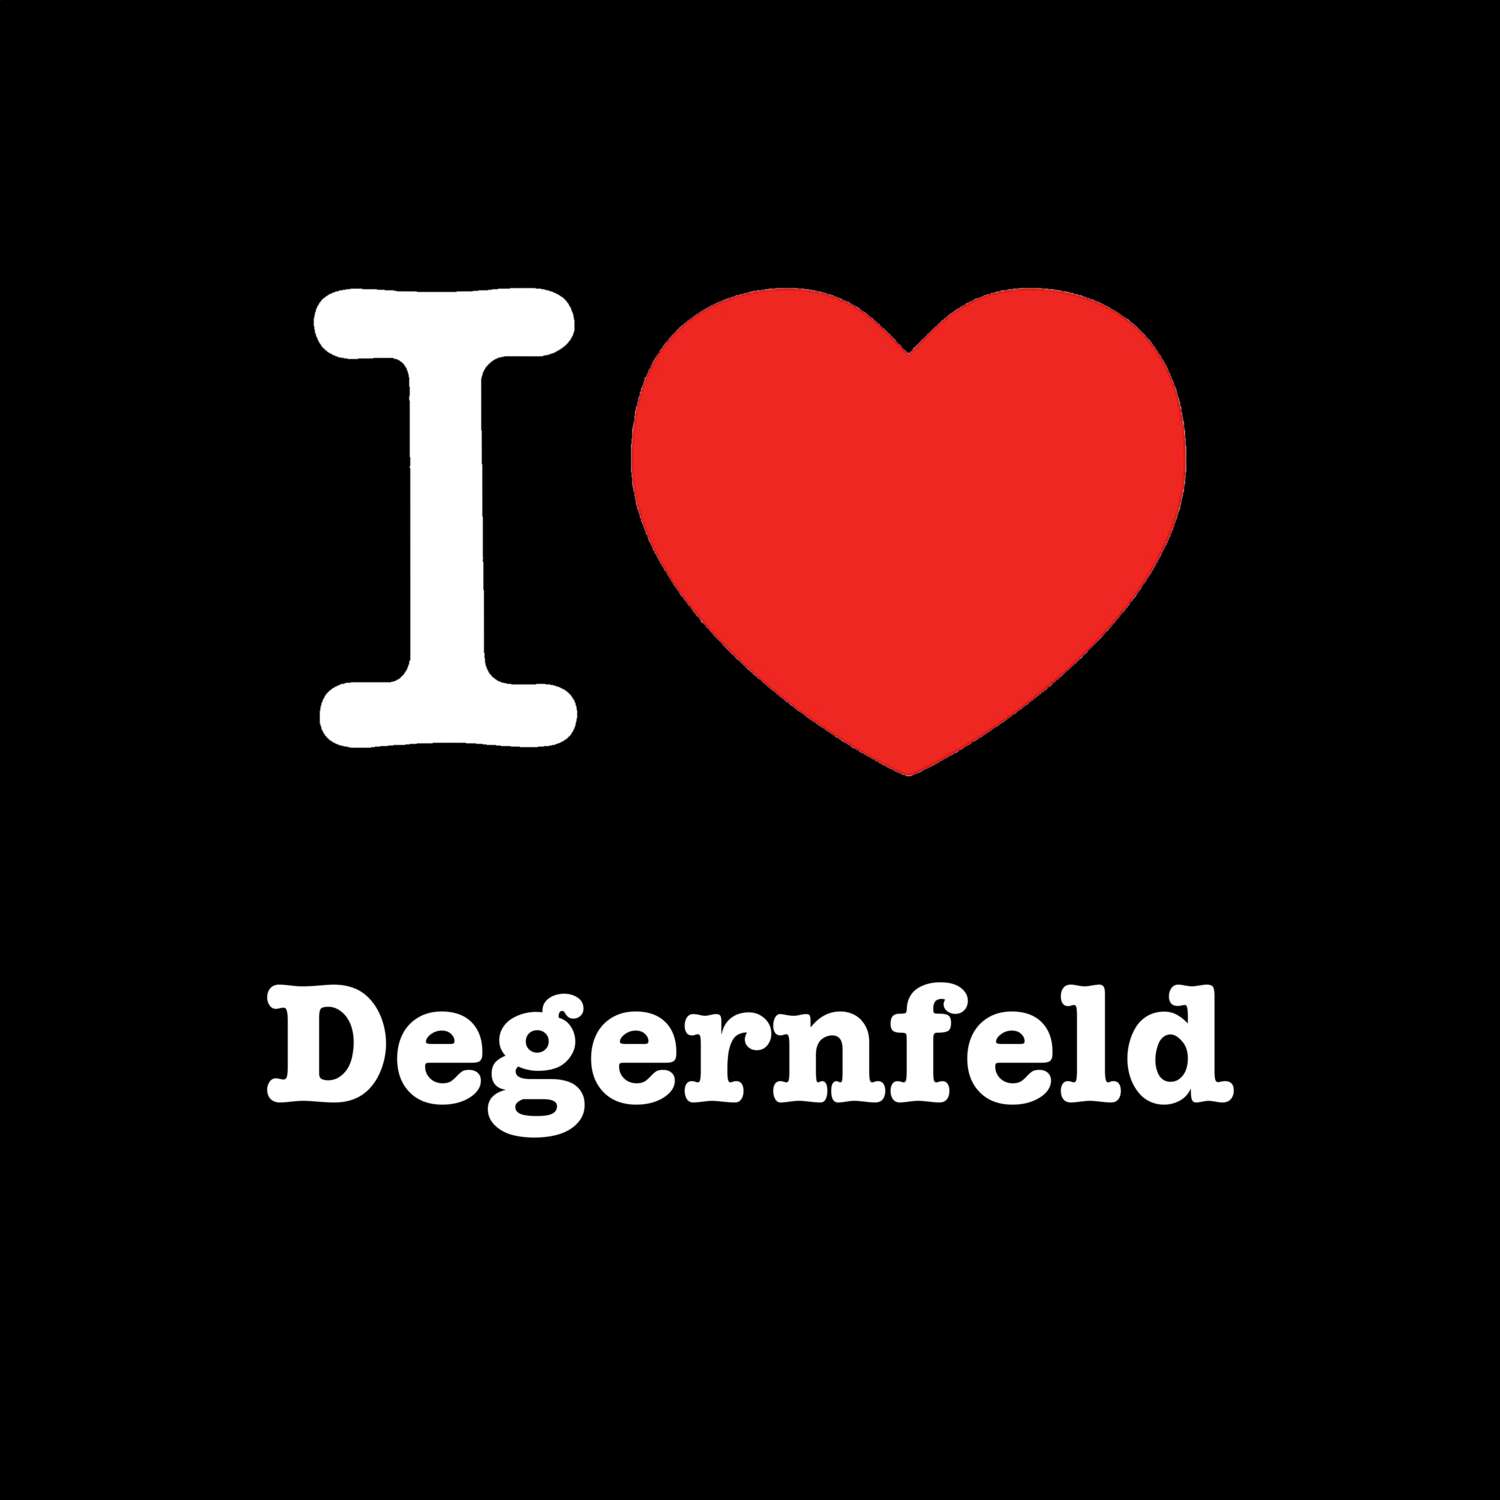 Degernfeld T-Shirt »I love«